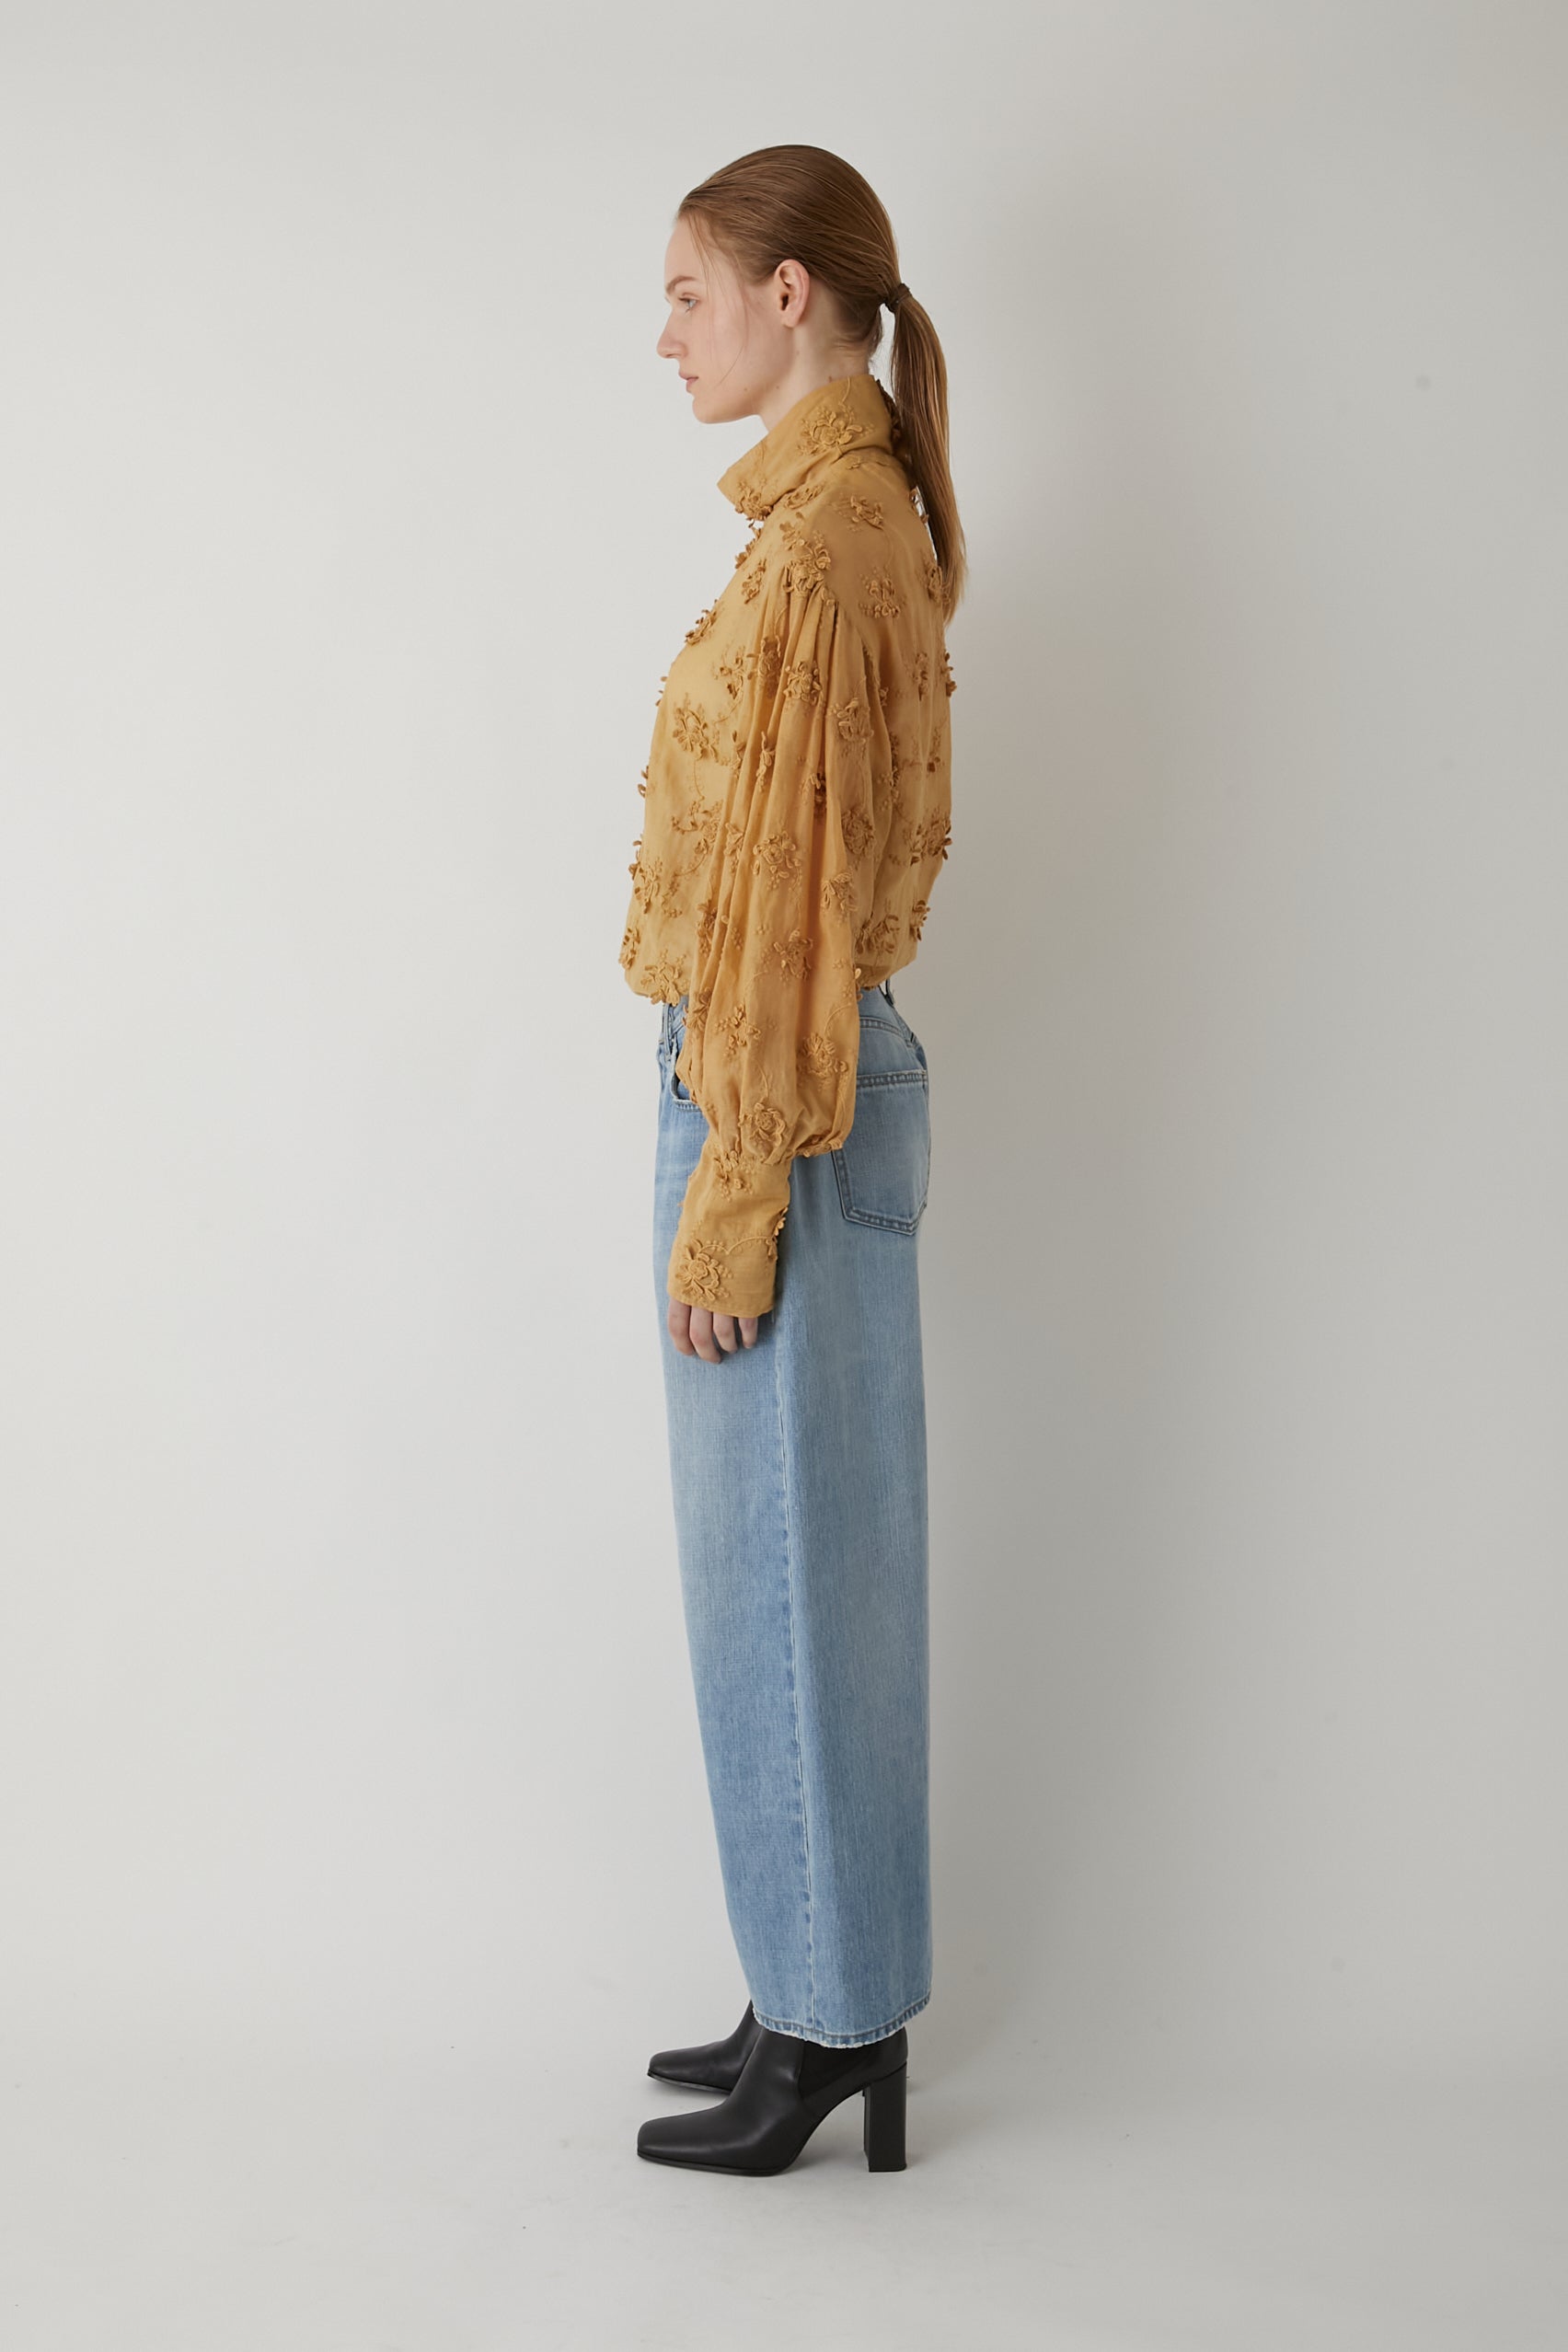 【SECRET SALE】3D embroidery long blouse │ BARLEY CAMEL